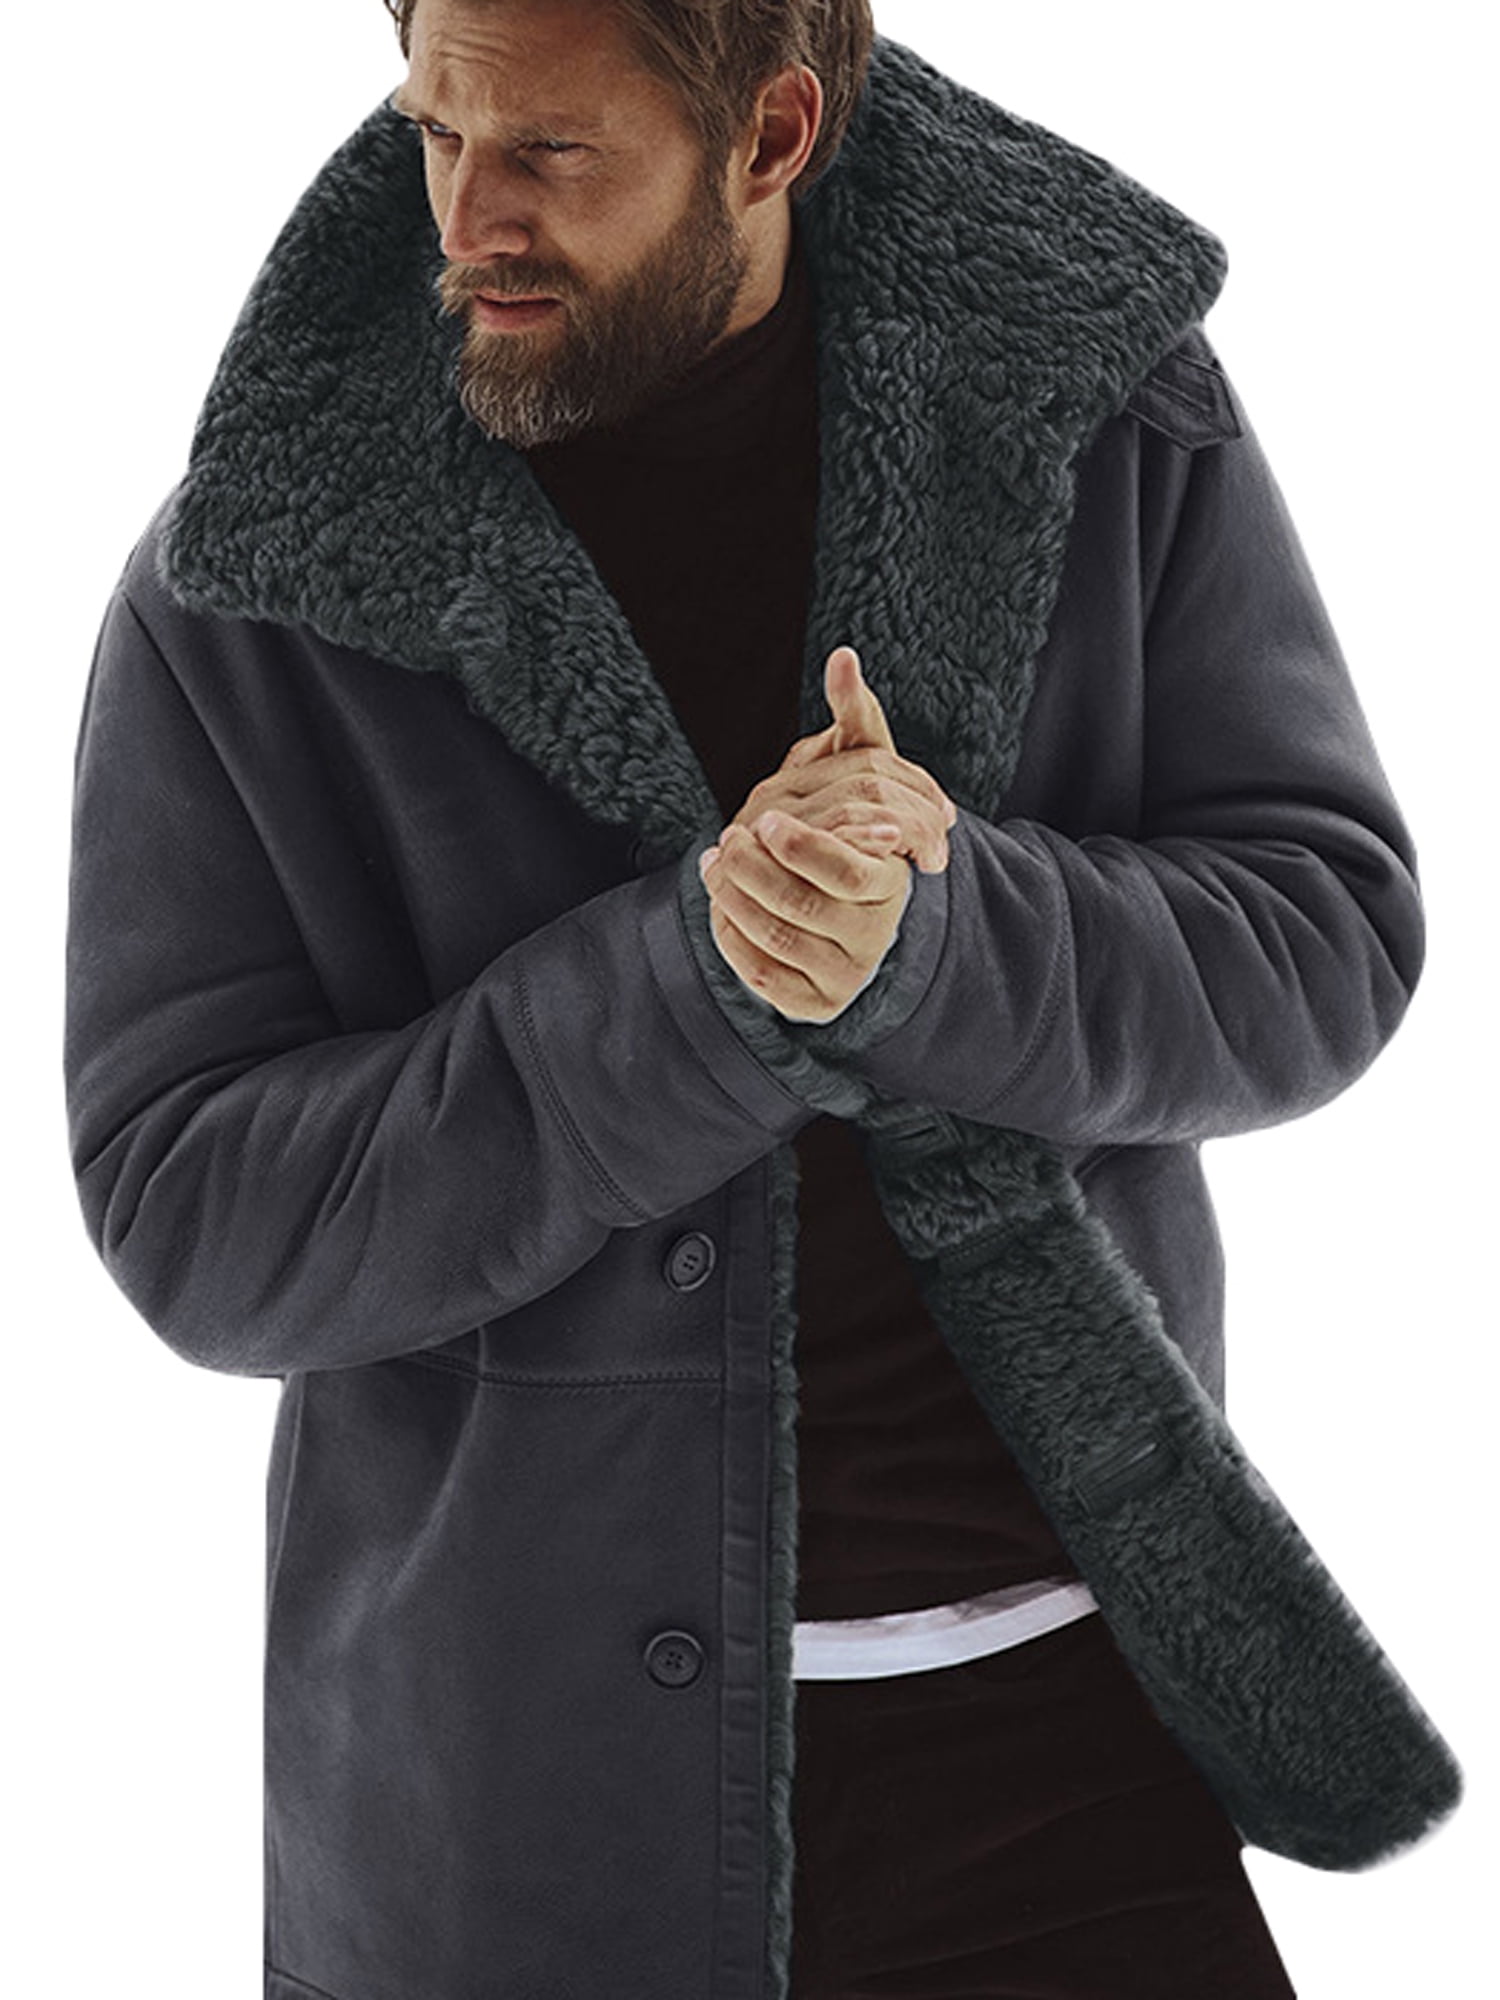 heymoney Men’s Lightweight Winter Hooded Down Jacket Packable Puffer Coat